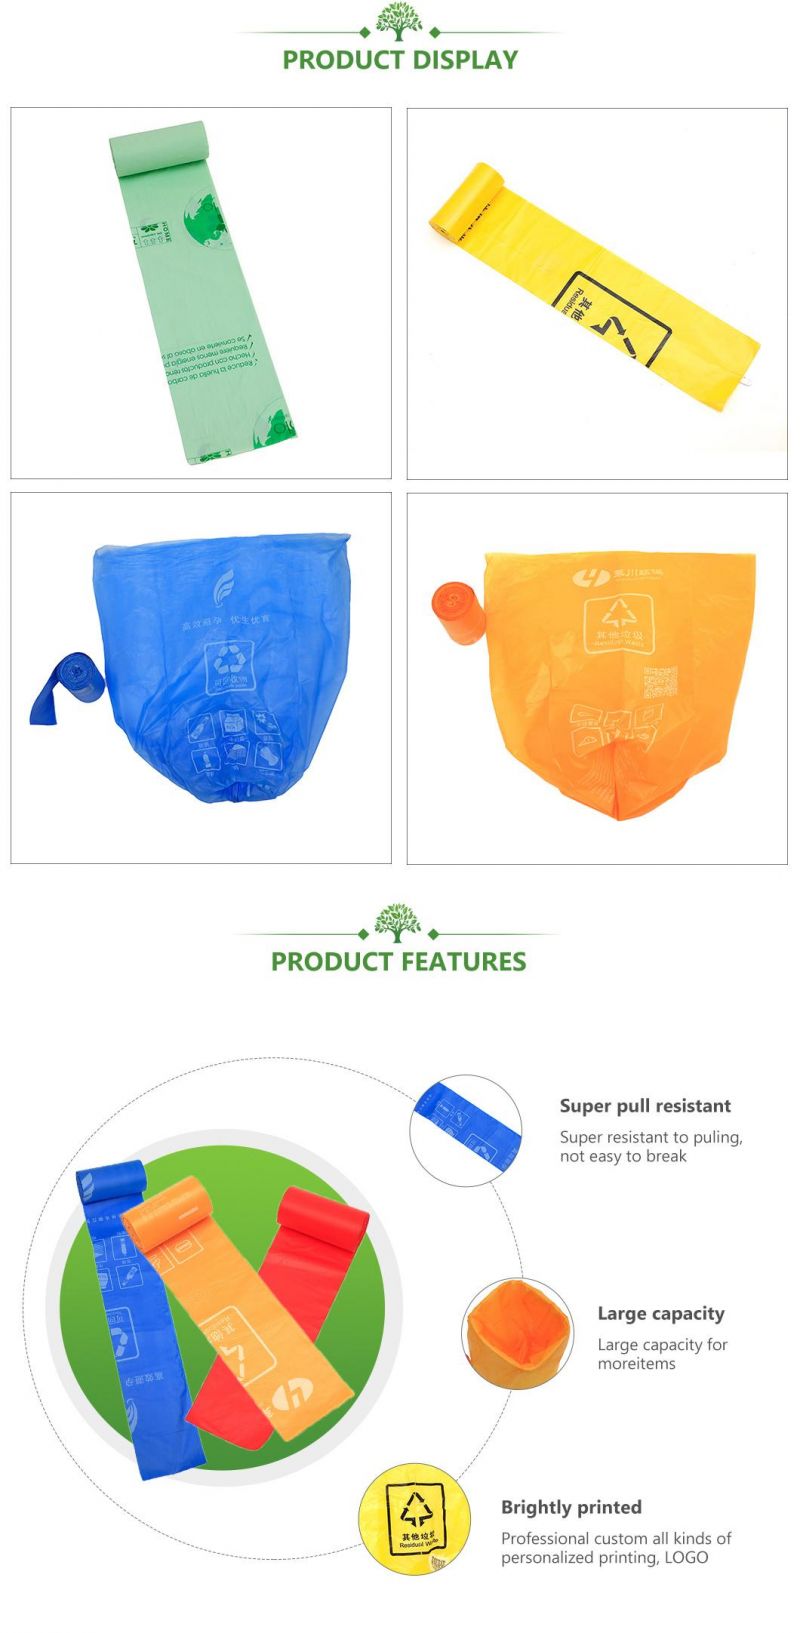 PLA+Pbat/Pbat+Corn Starch Biodegradable Bags, Compostable Bags, Garbage Bags for Factory